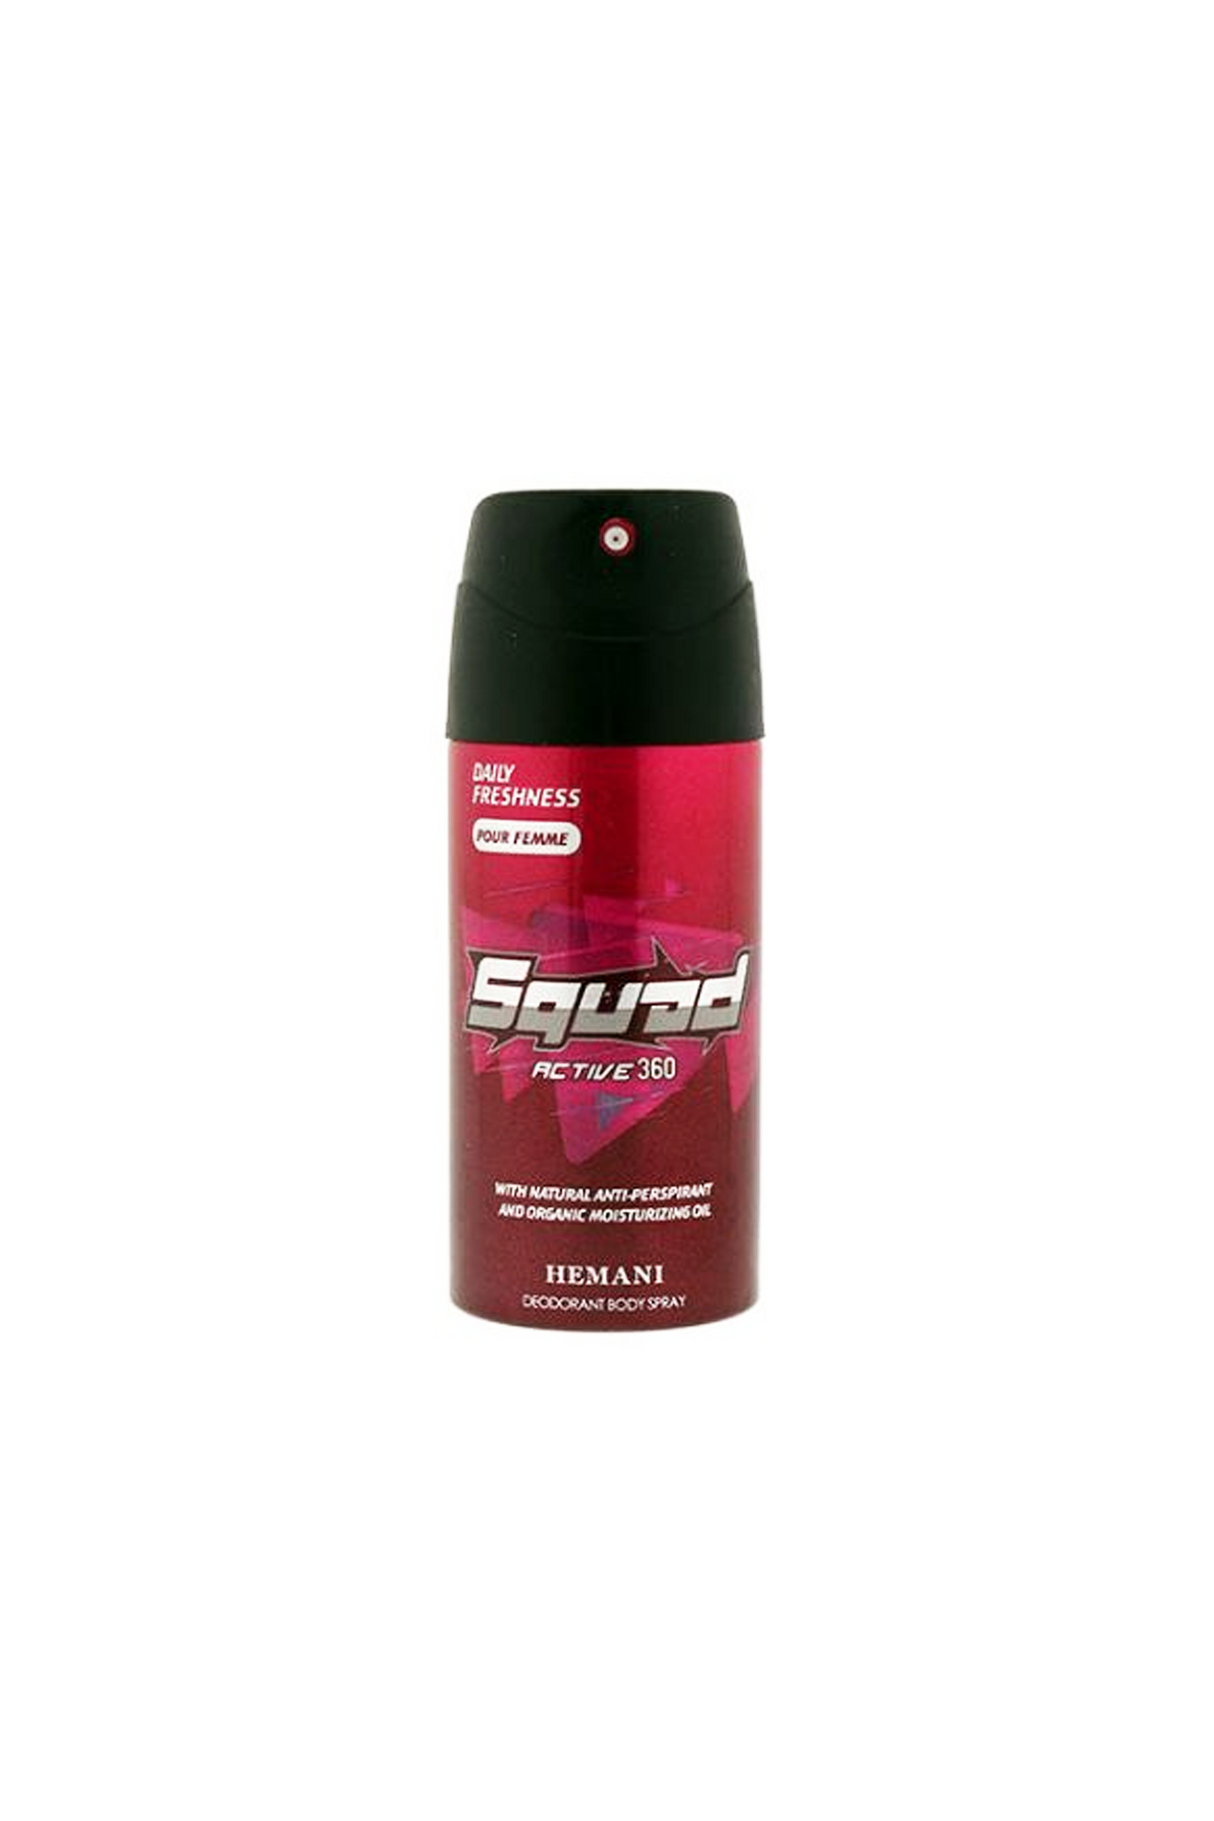 hemani squad active 360 deodorant body spray 150ml for women